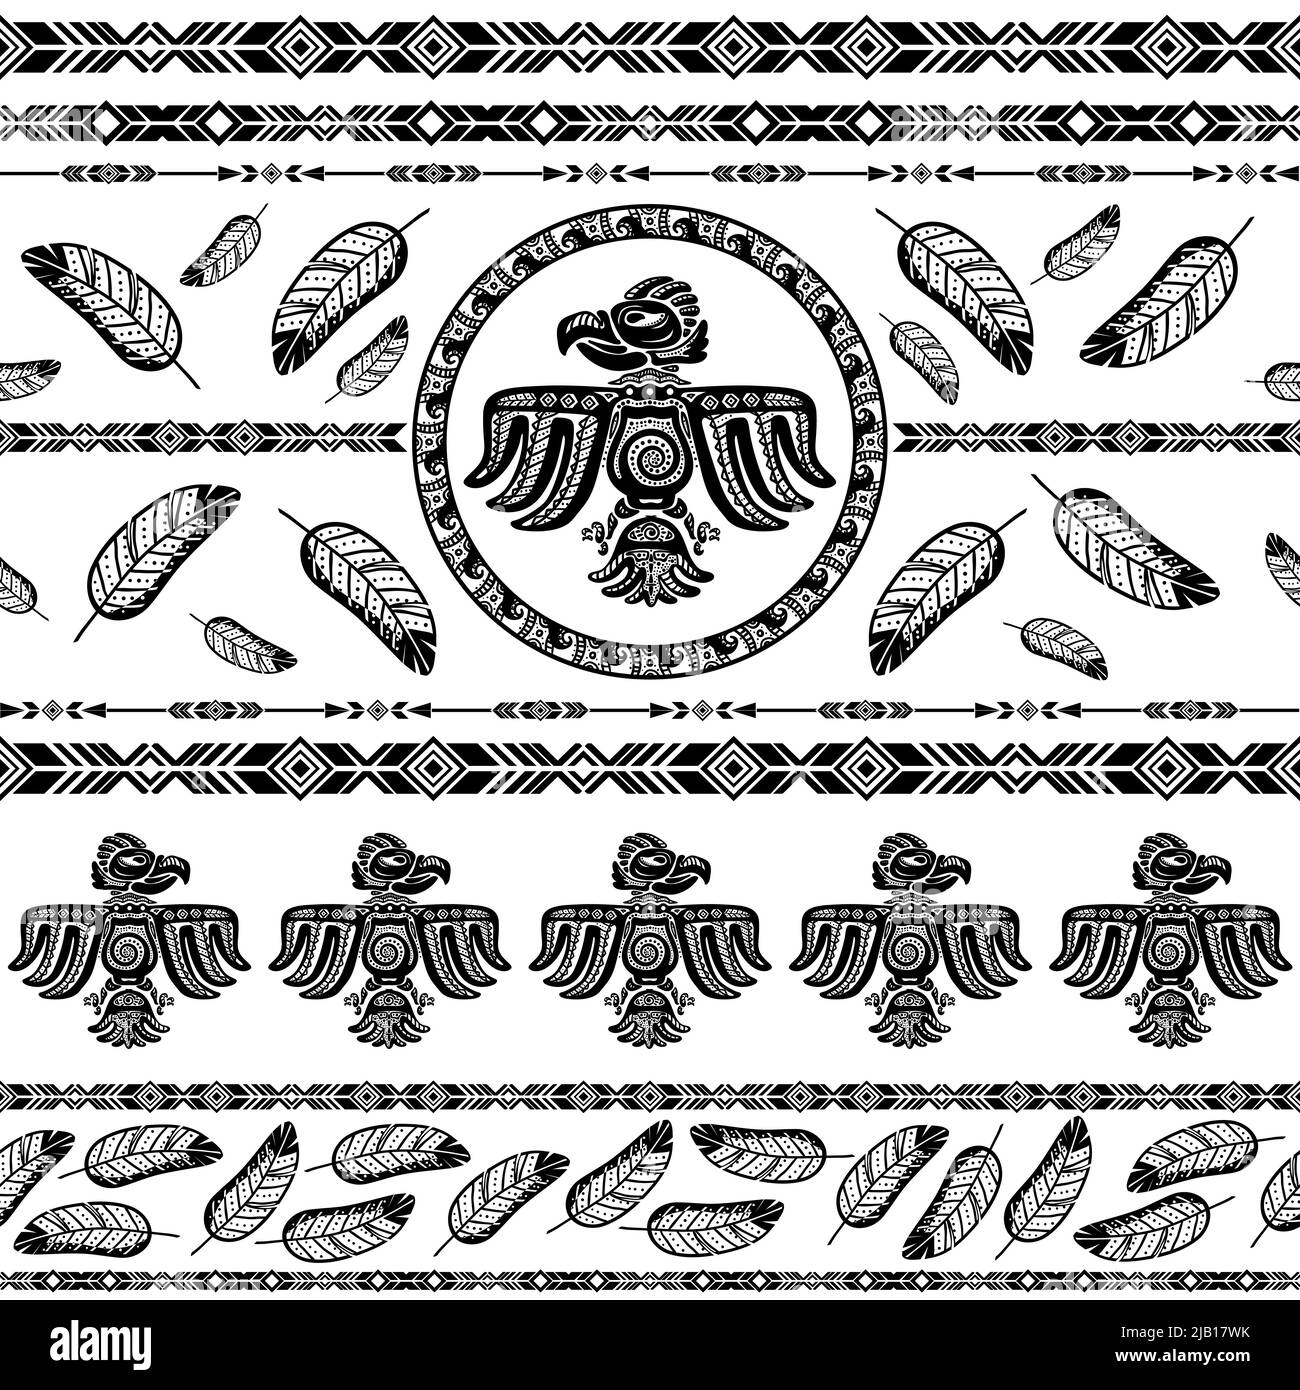 Indian tribal abstract pattern background vector illustration Illustration de Vecteur